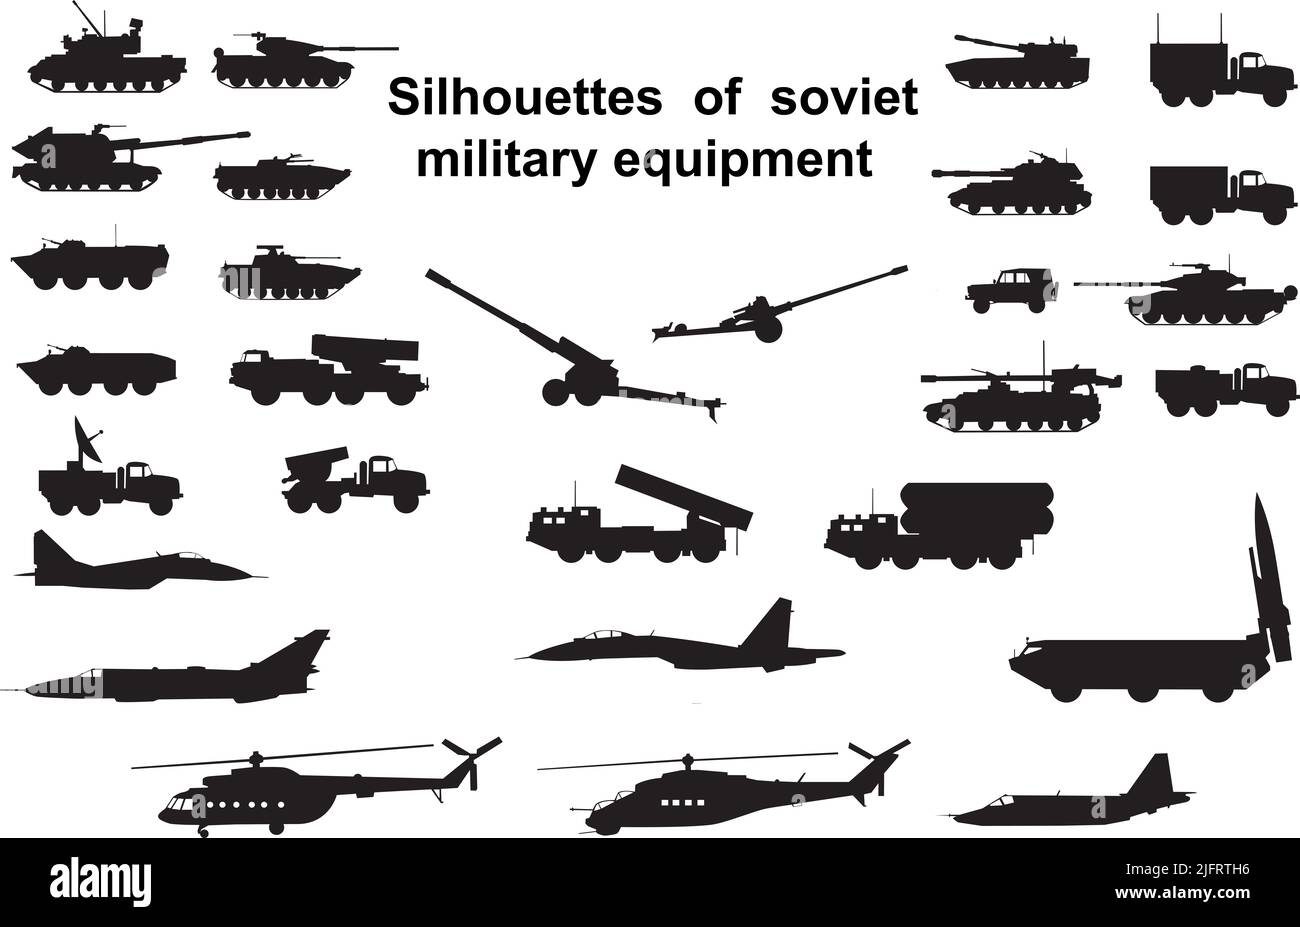 silhouettes of soviet military equipment Stock Photo